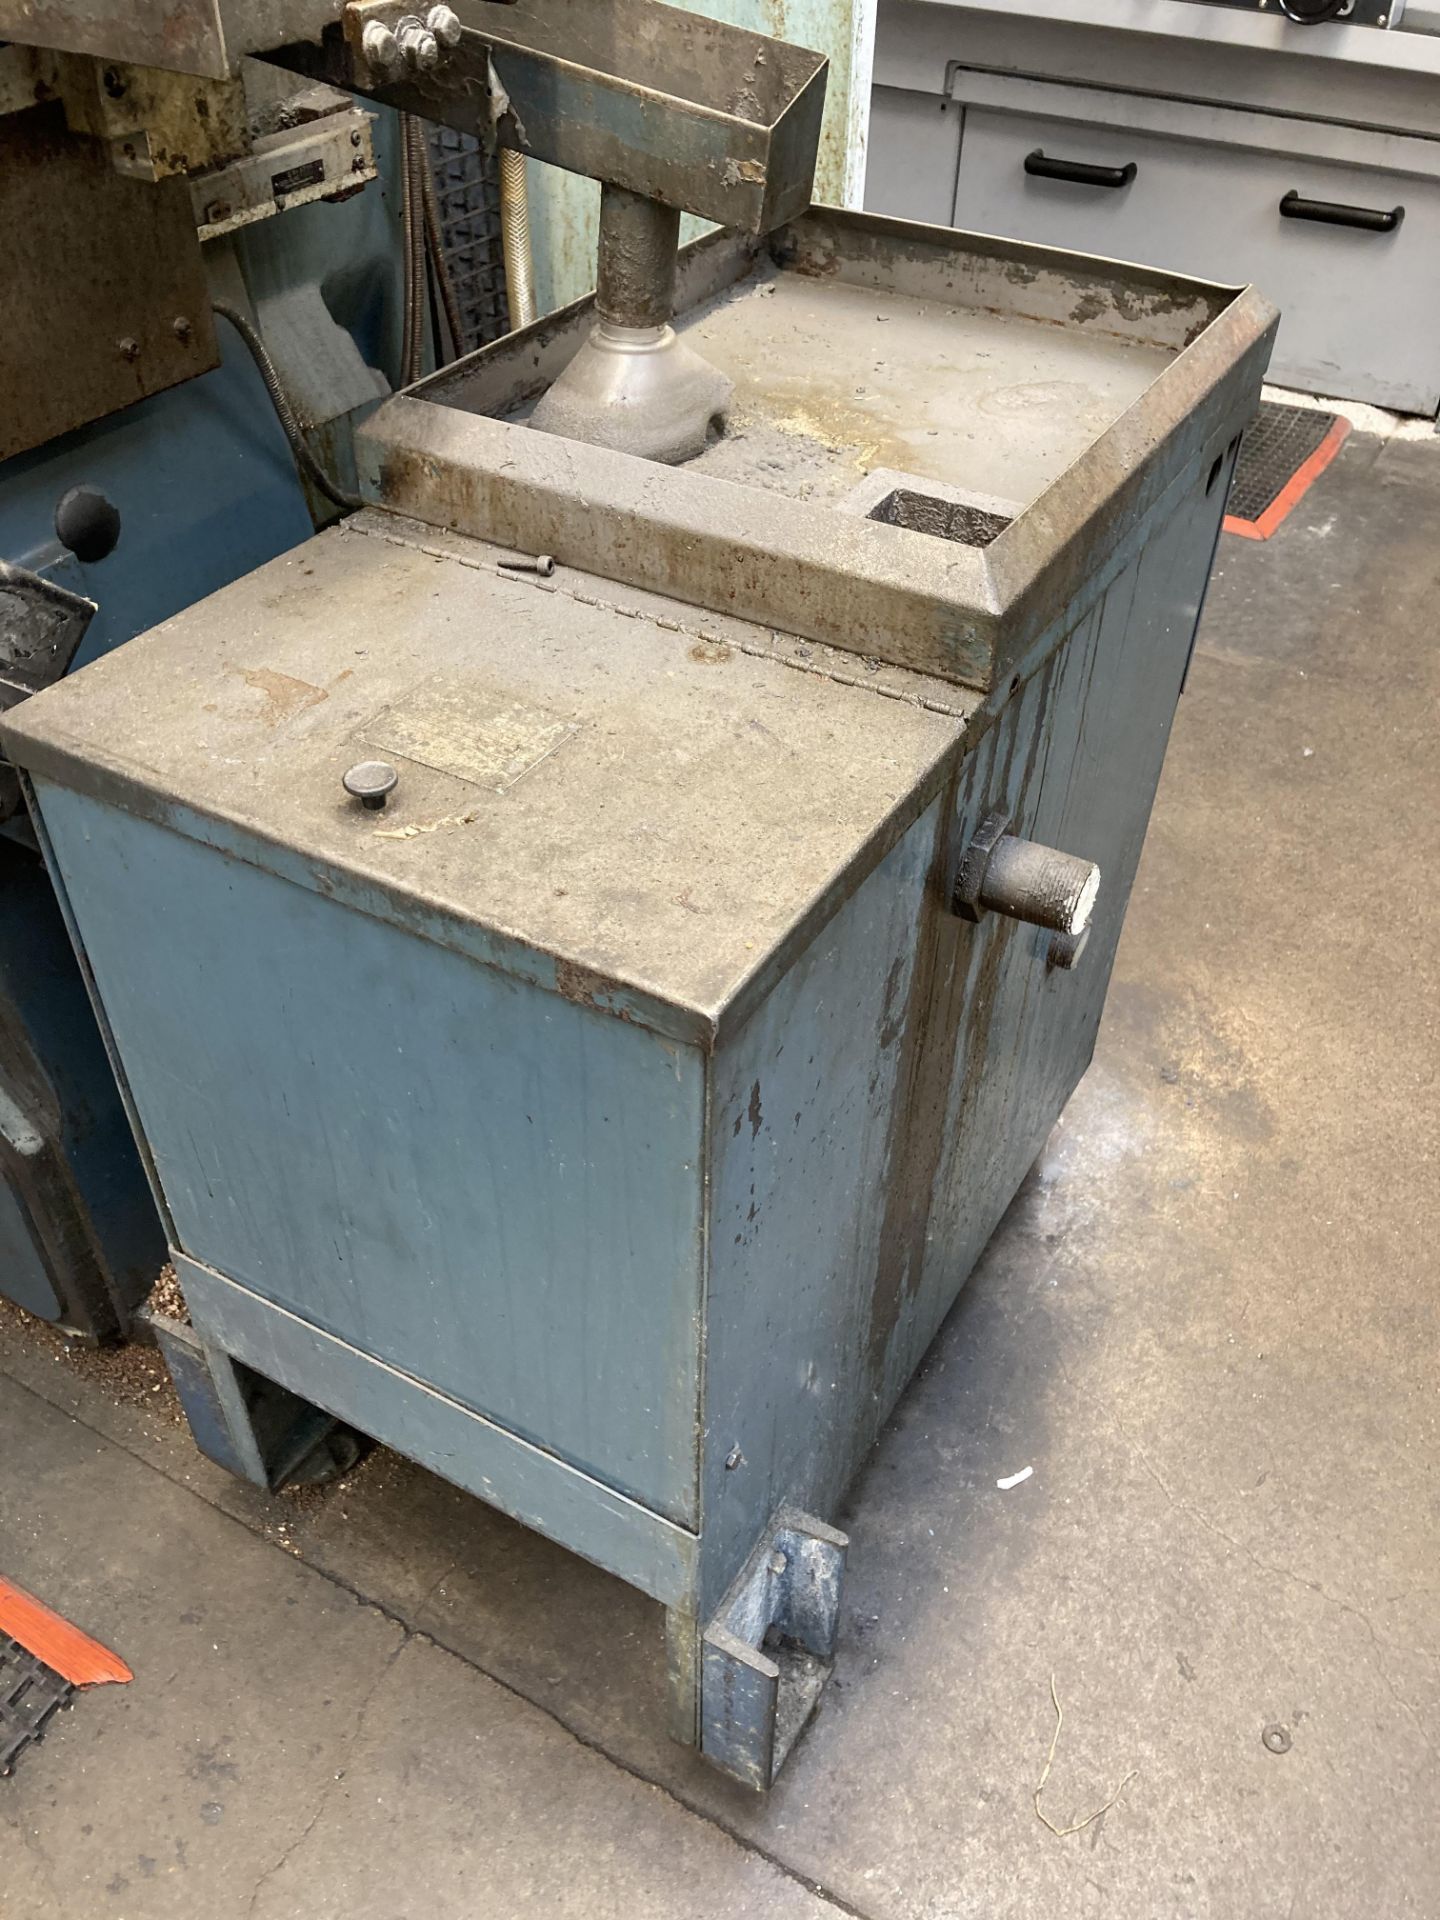 Jones & Shipman 540L horizontal surface grinding machine, Serial No. B098289, table size 26" x 6" - Image 8 of 9